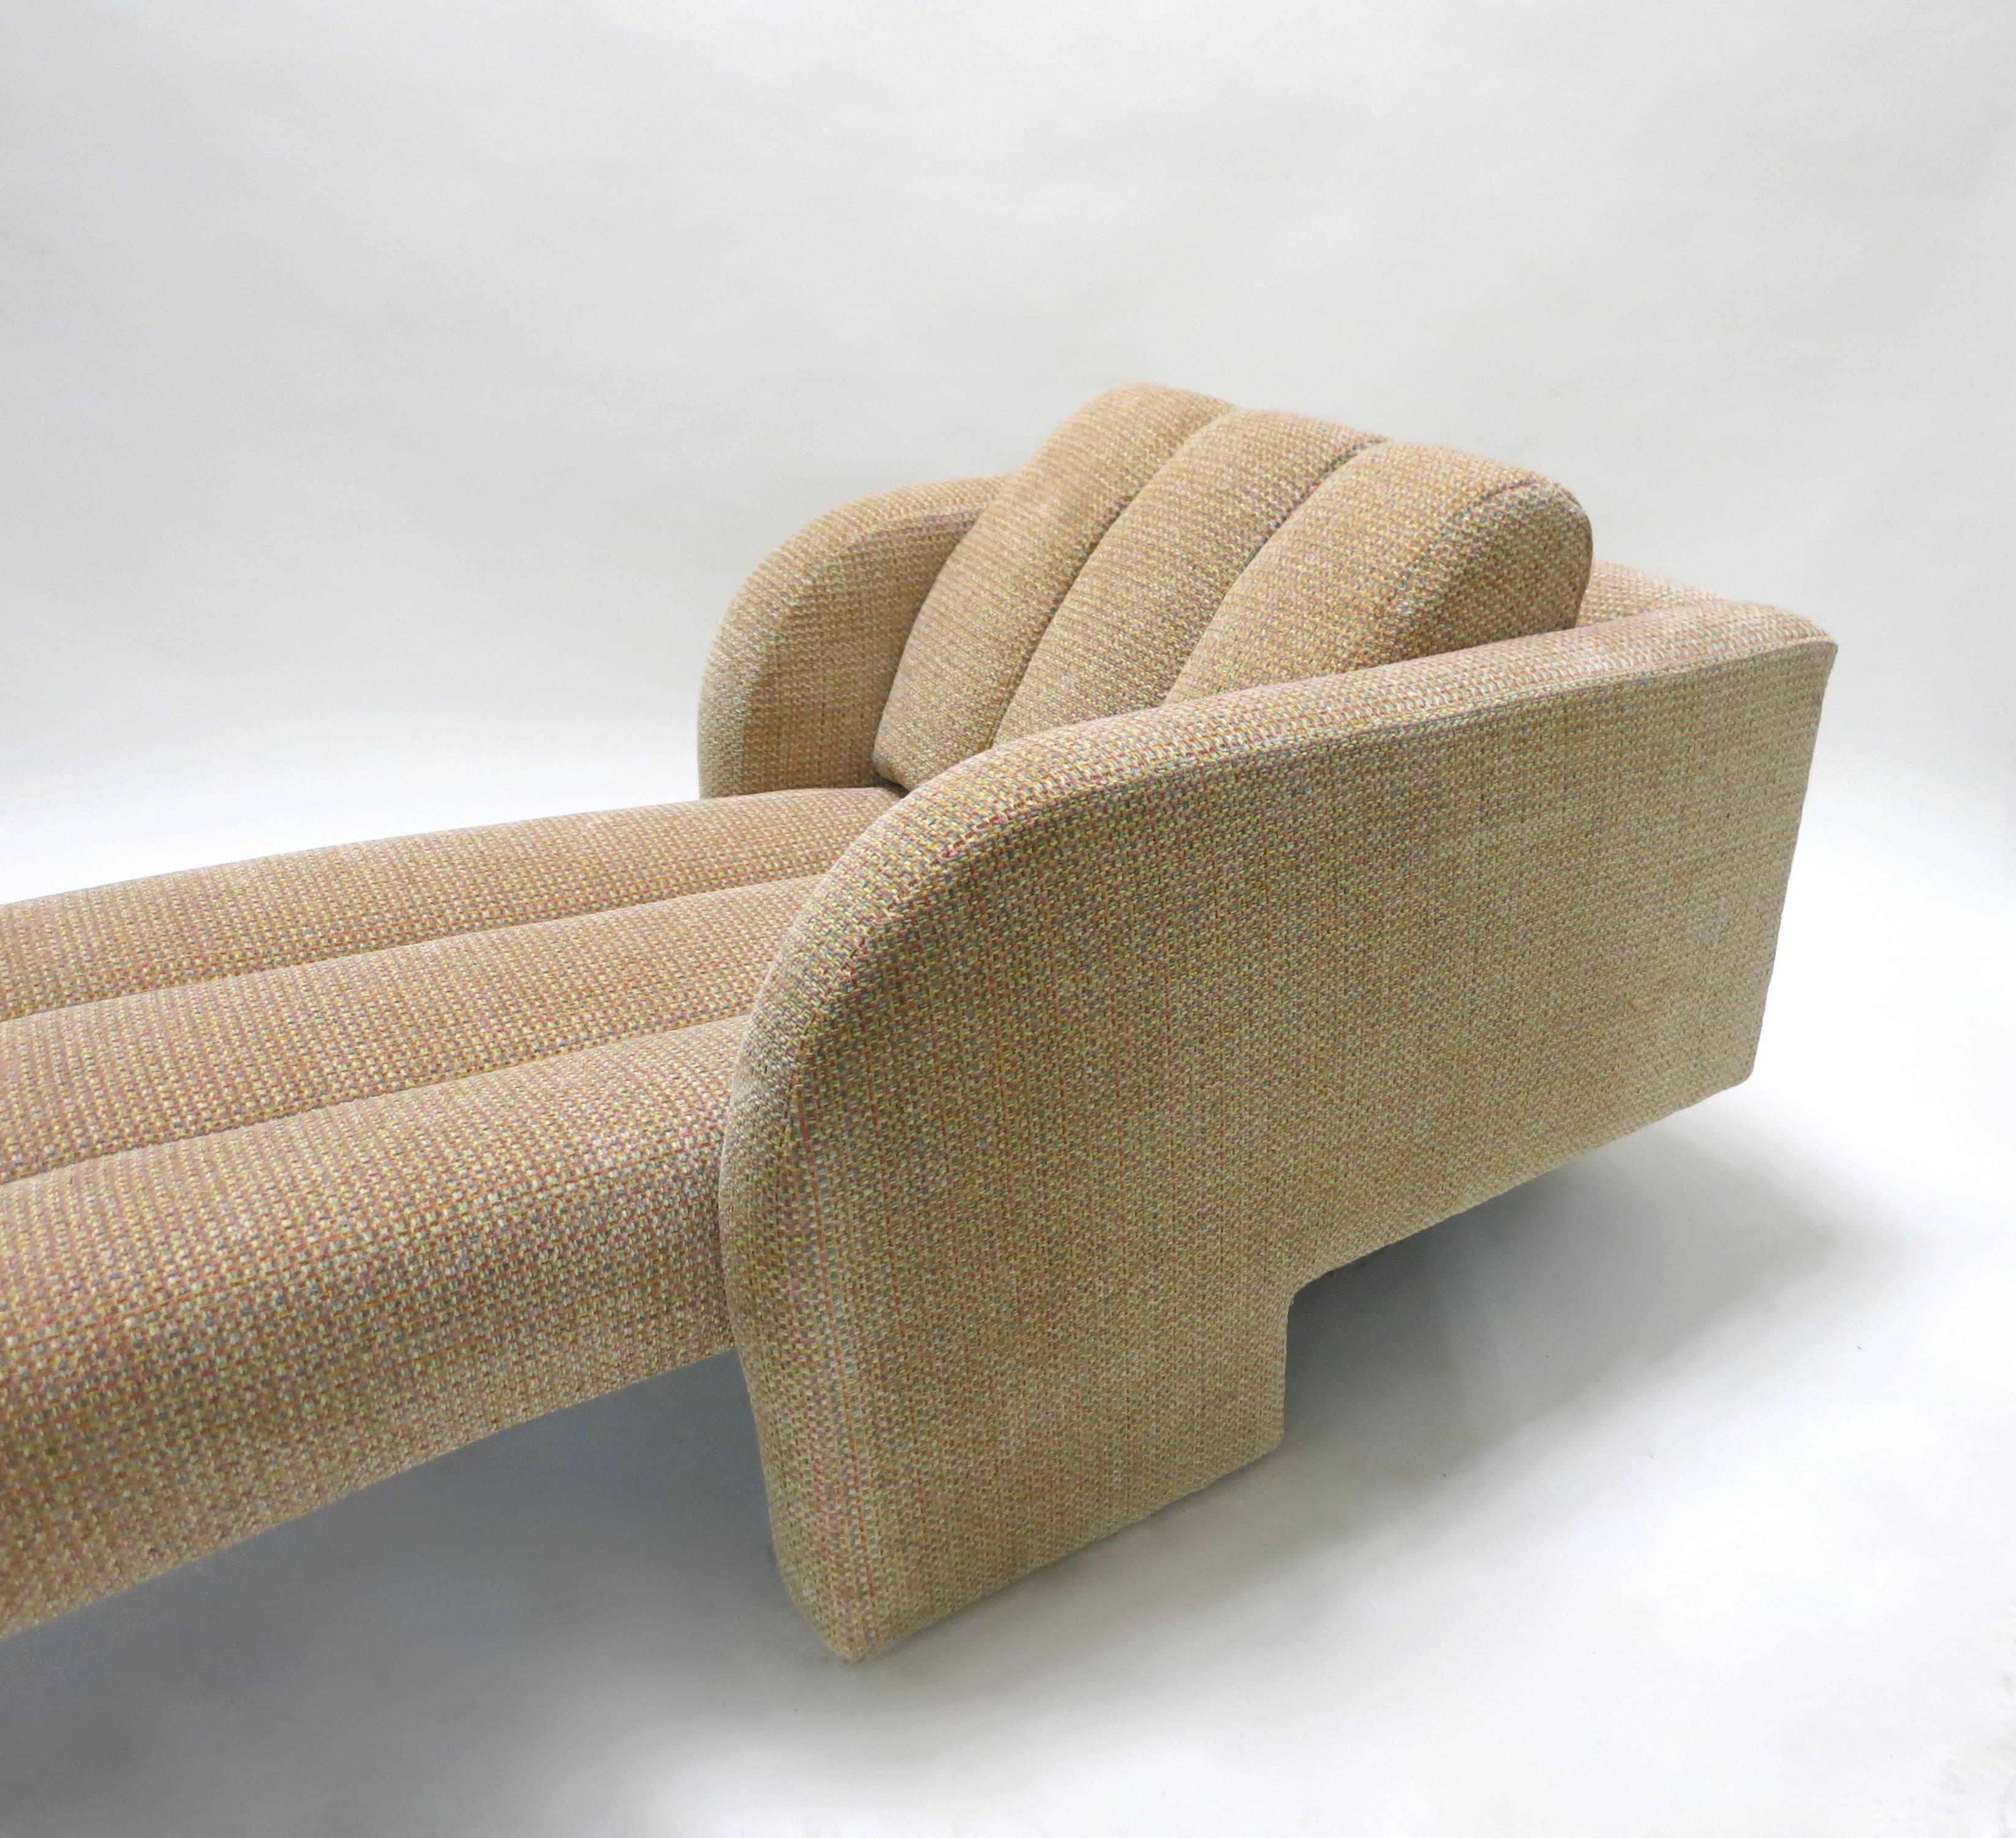 Late 20th Century Chaise Longue / Lounge Chair by Vladimir Kagan, USA 1970s